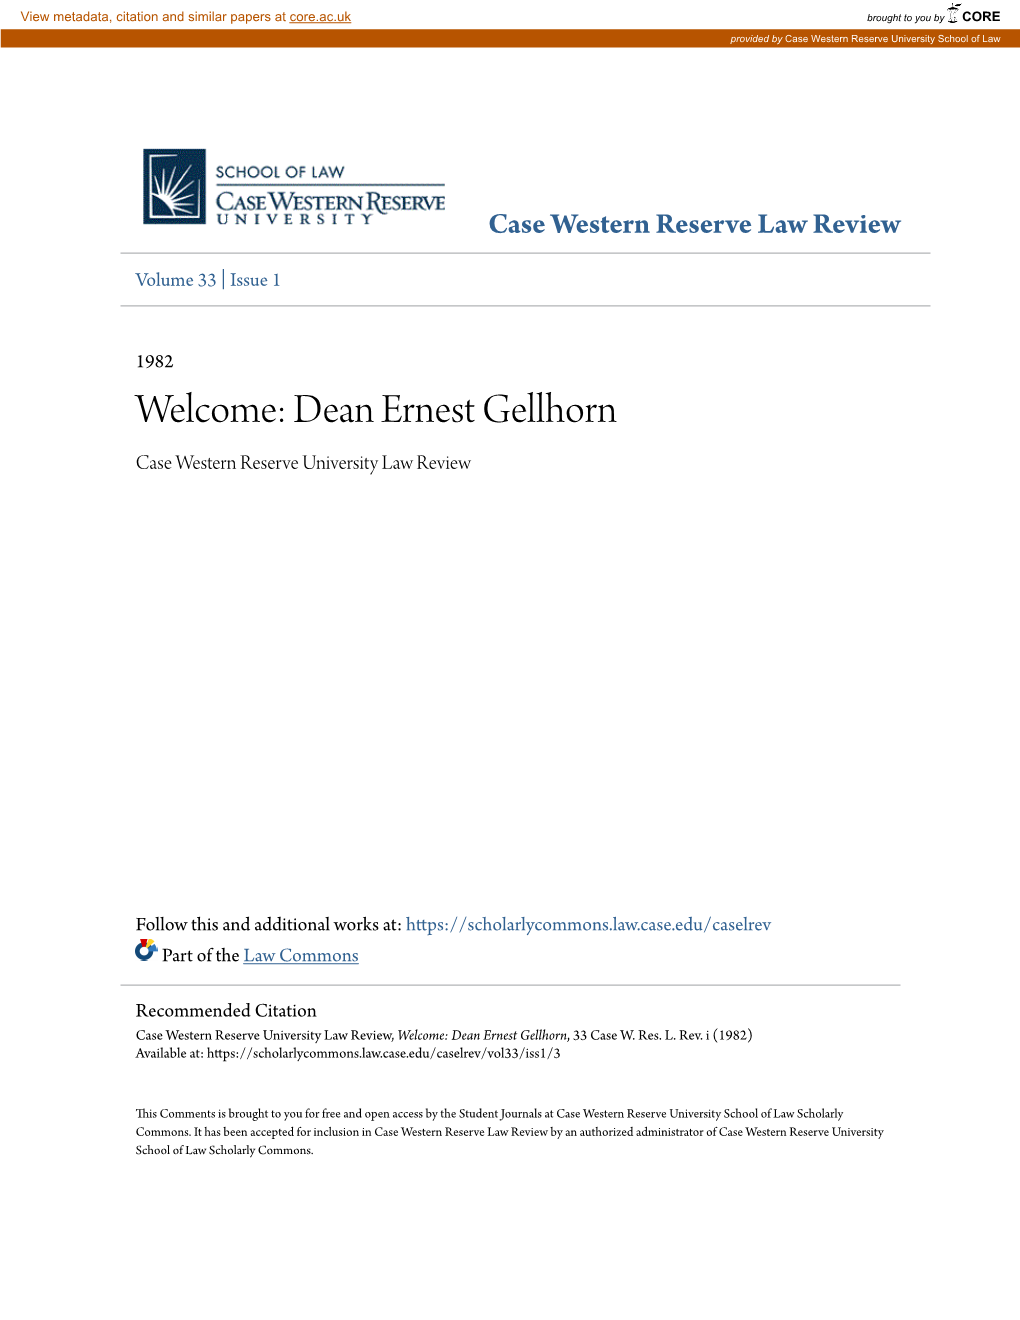 Dean Ernest Gellhorn Case Western Reserve University Law Review